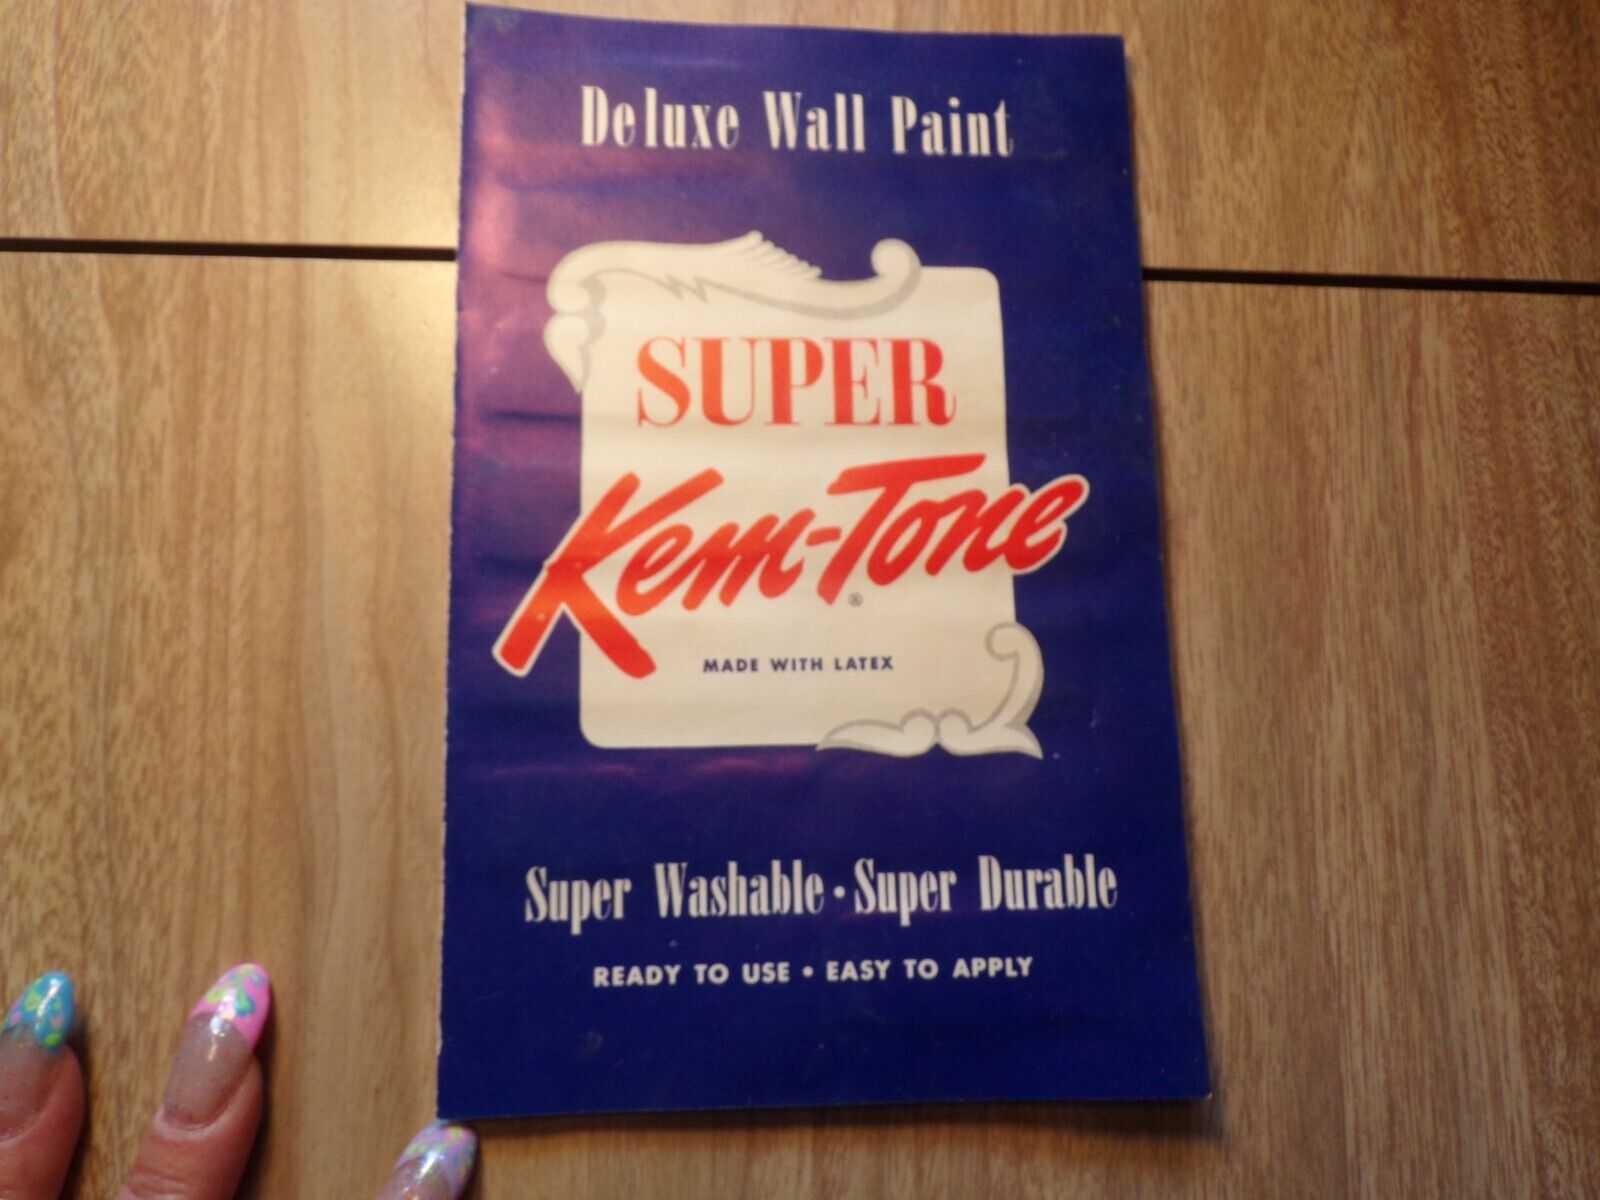 VTG Brochure Super Kem-Tone deluxe Wall Paint